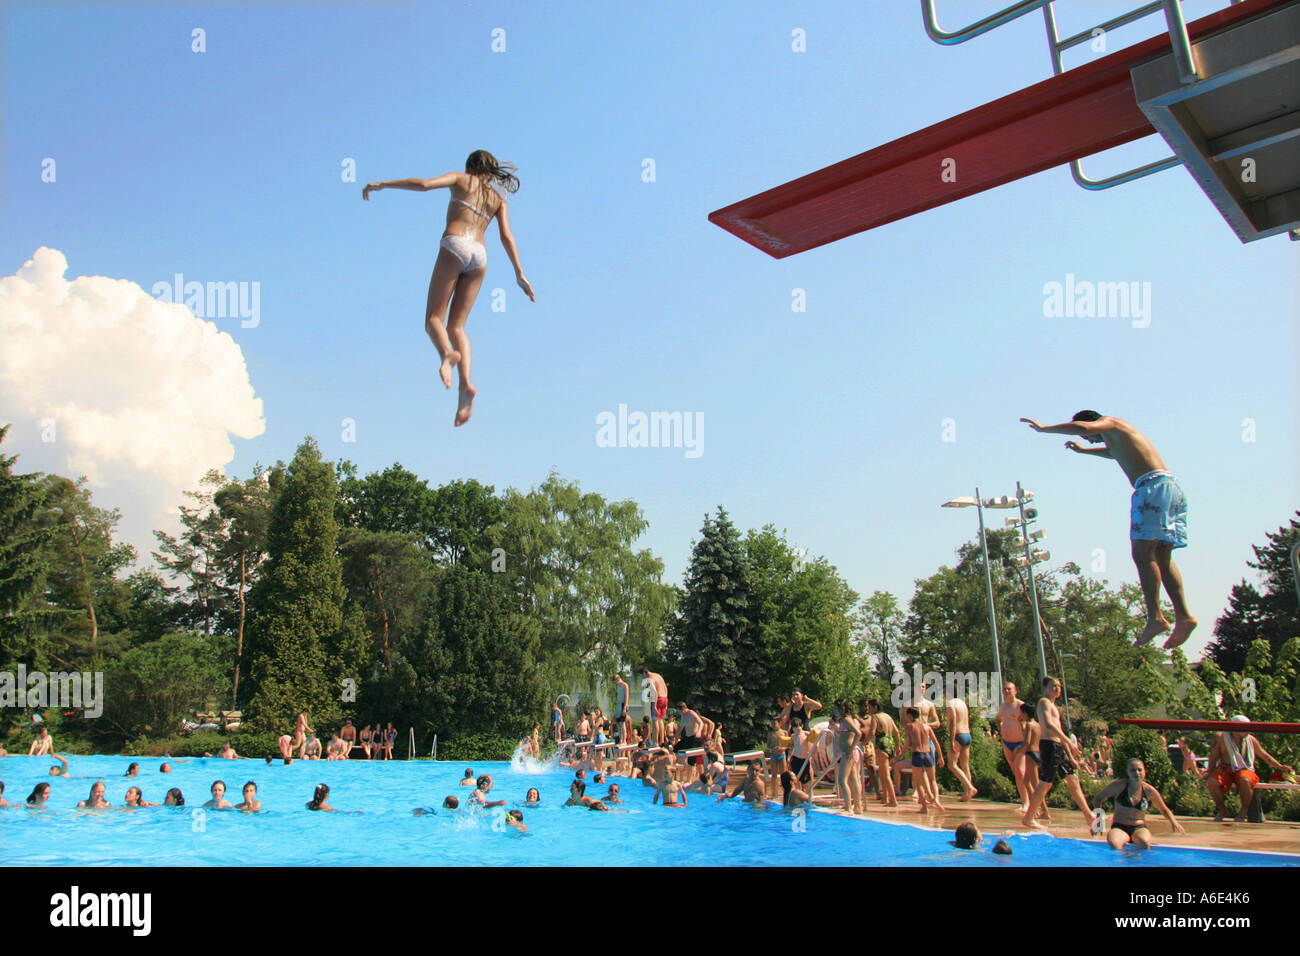 06.06.2005, Heidelberg, DEU, Kinder springen vom Sprungturm, heißen Sommer am pool Stockfoto